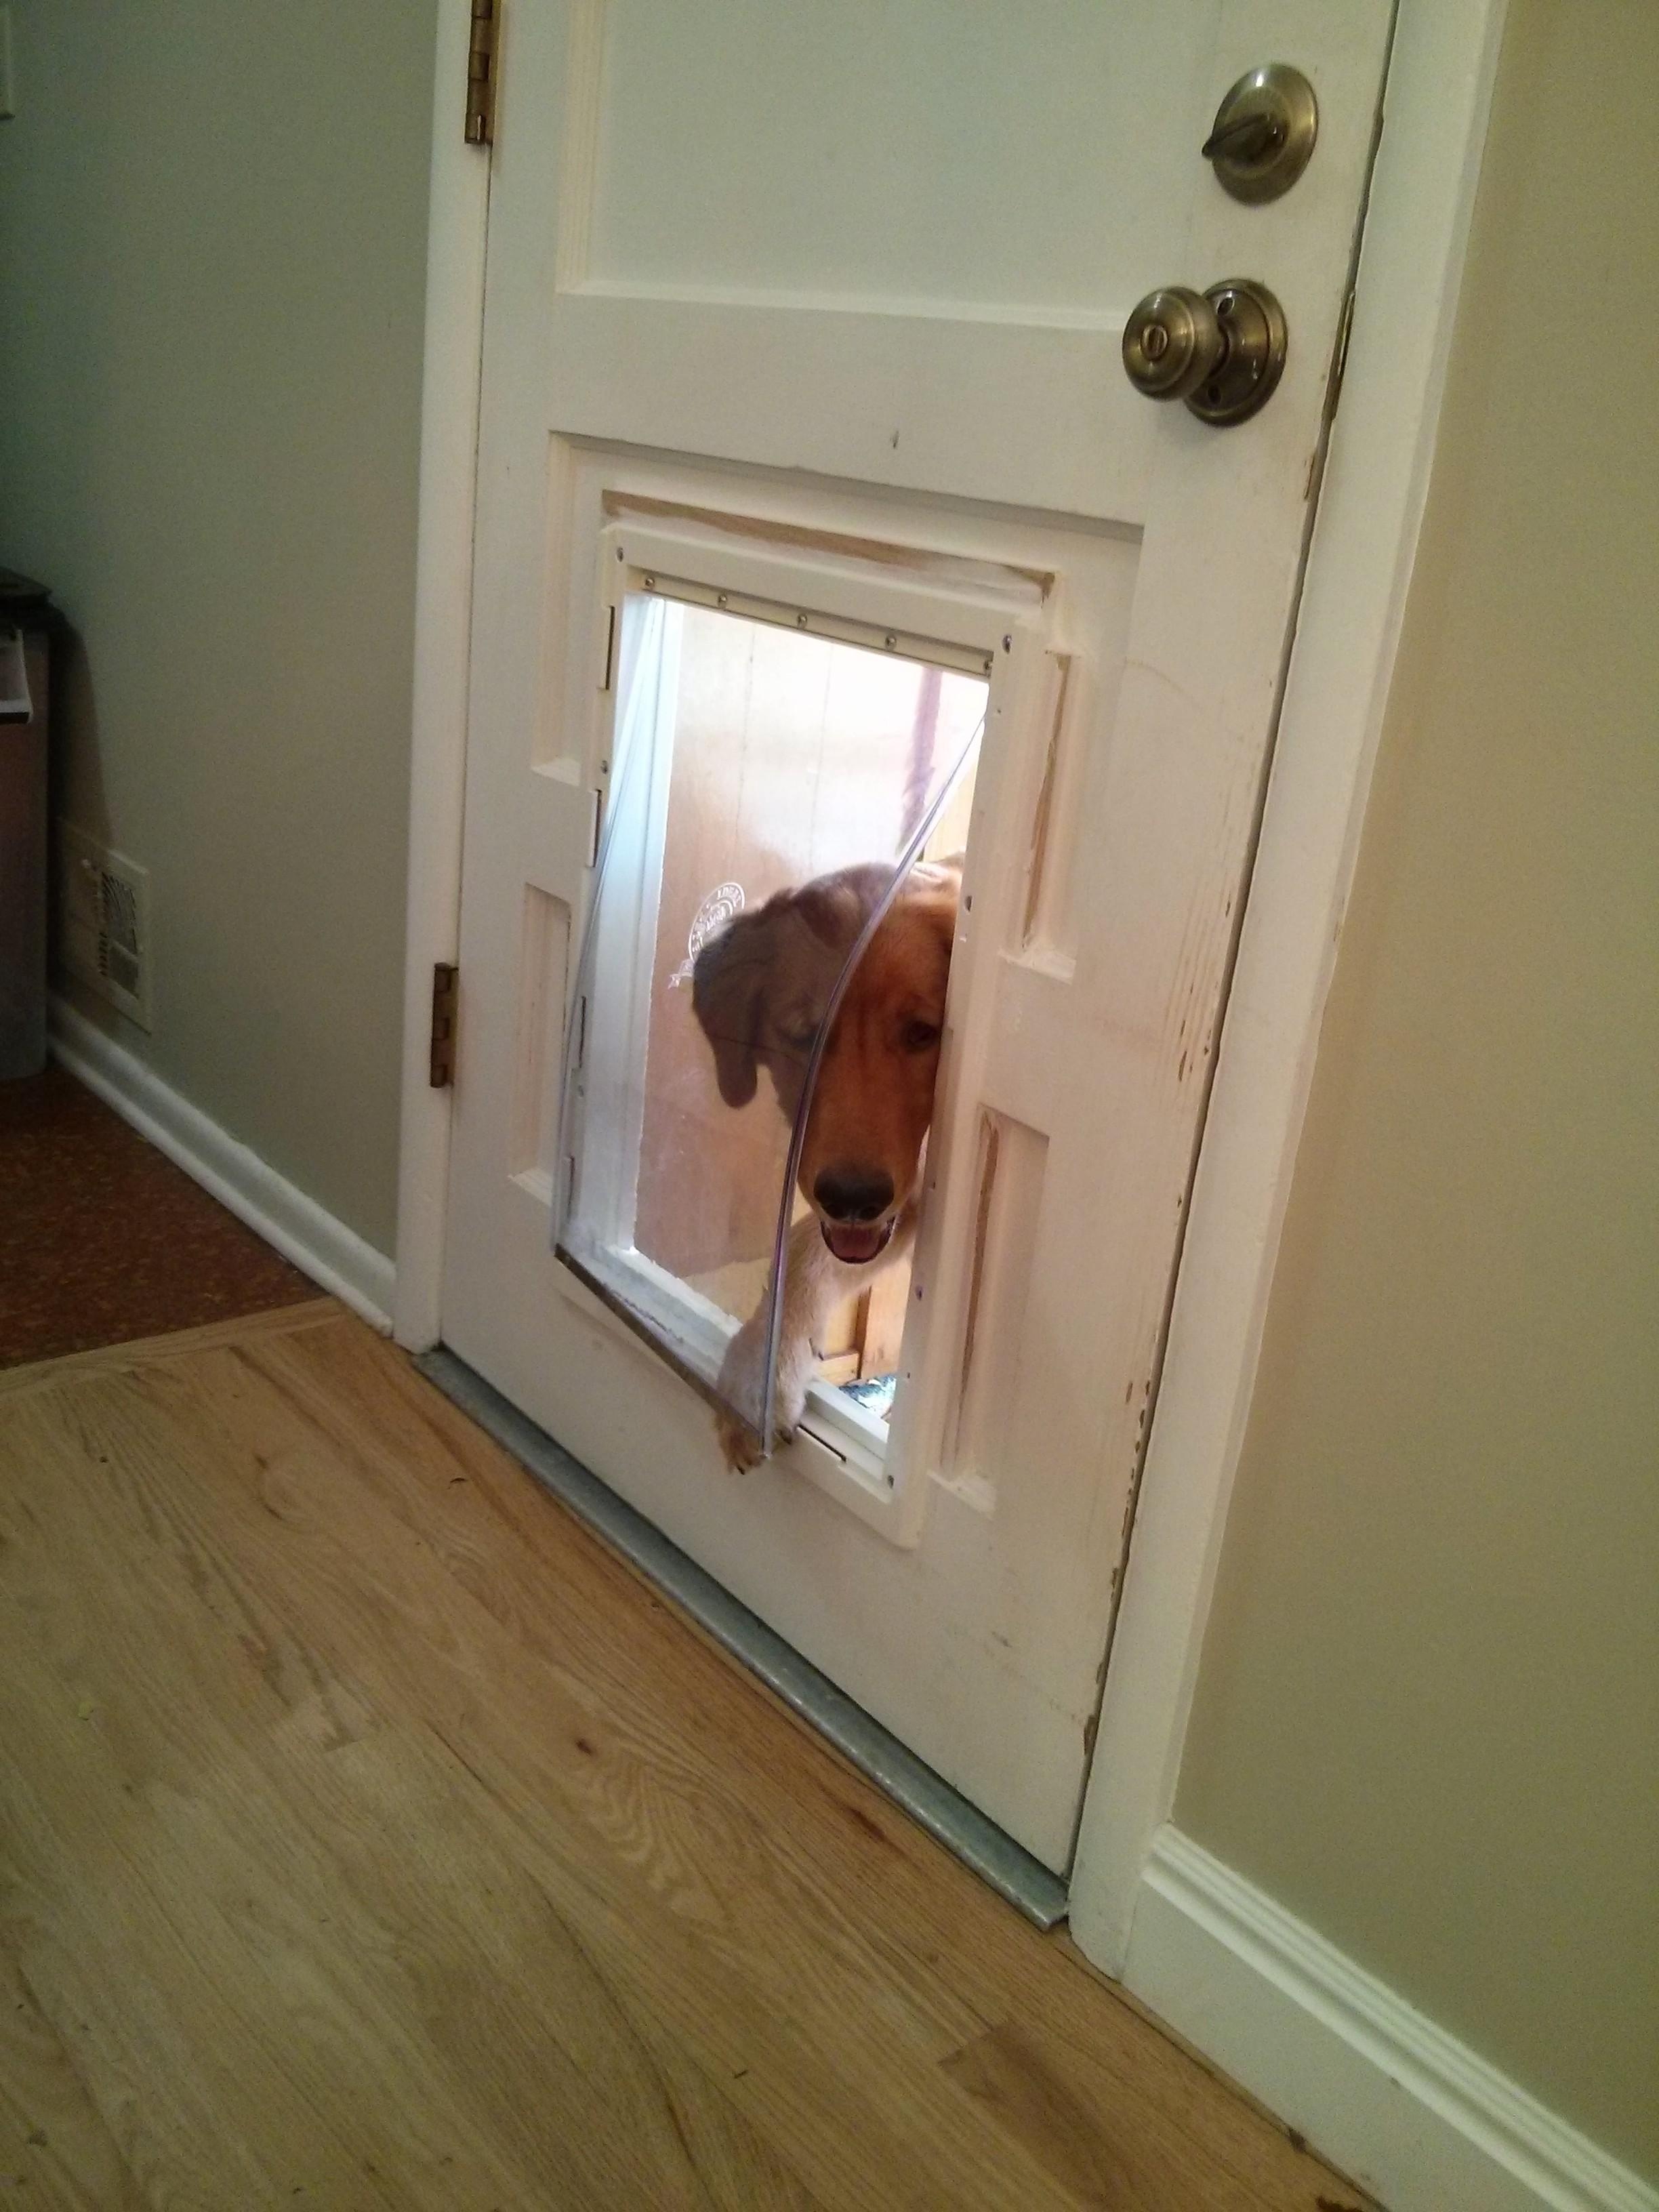 Golden retriever, Bender, poking just his head through a dog door